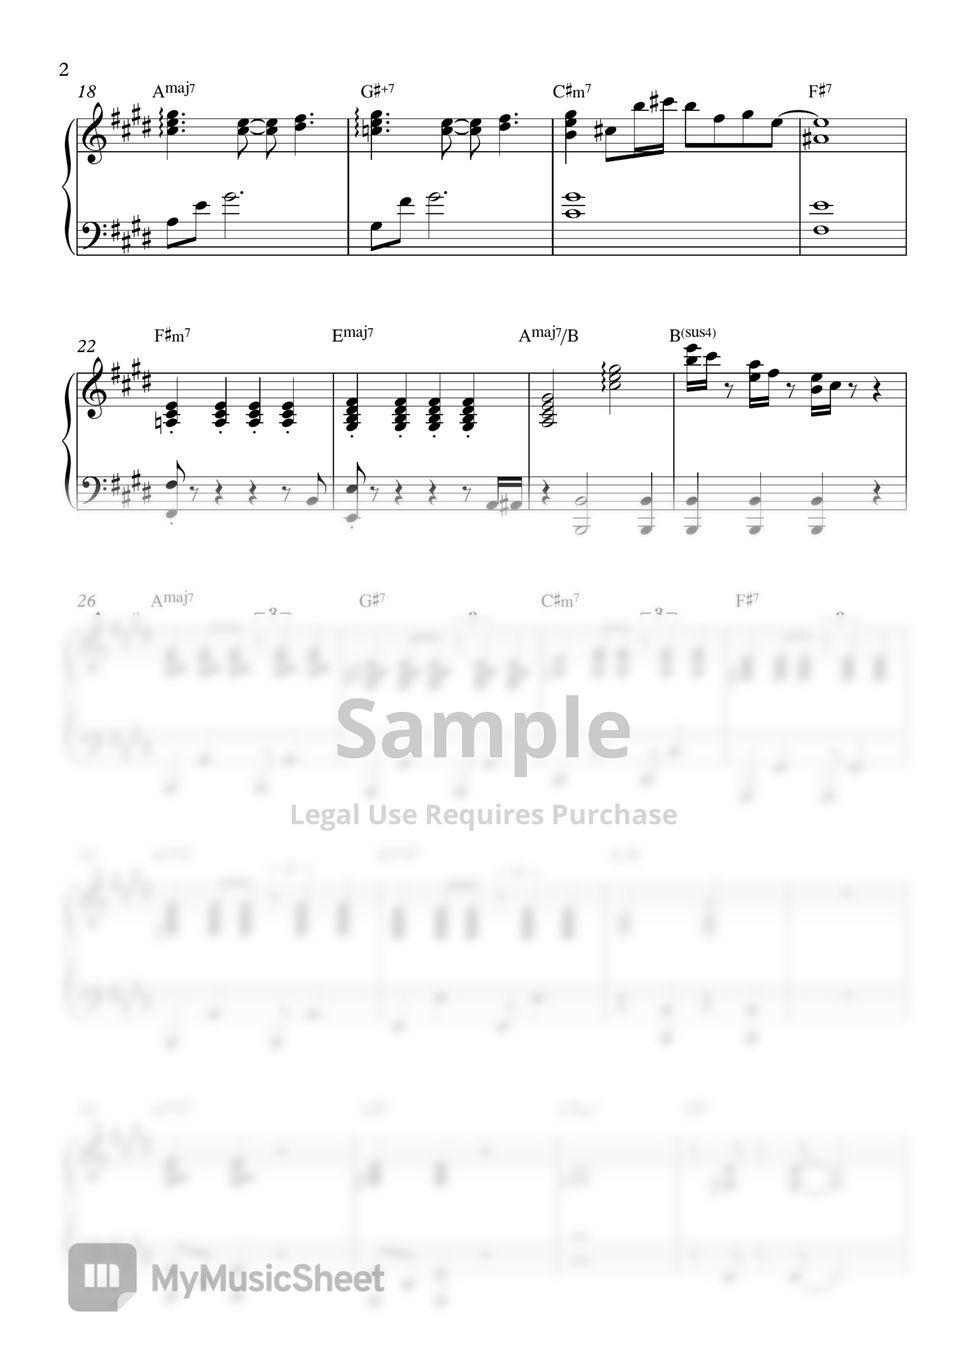 IU - dlwlrma (piano sheet) by rlathdud